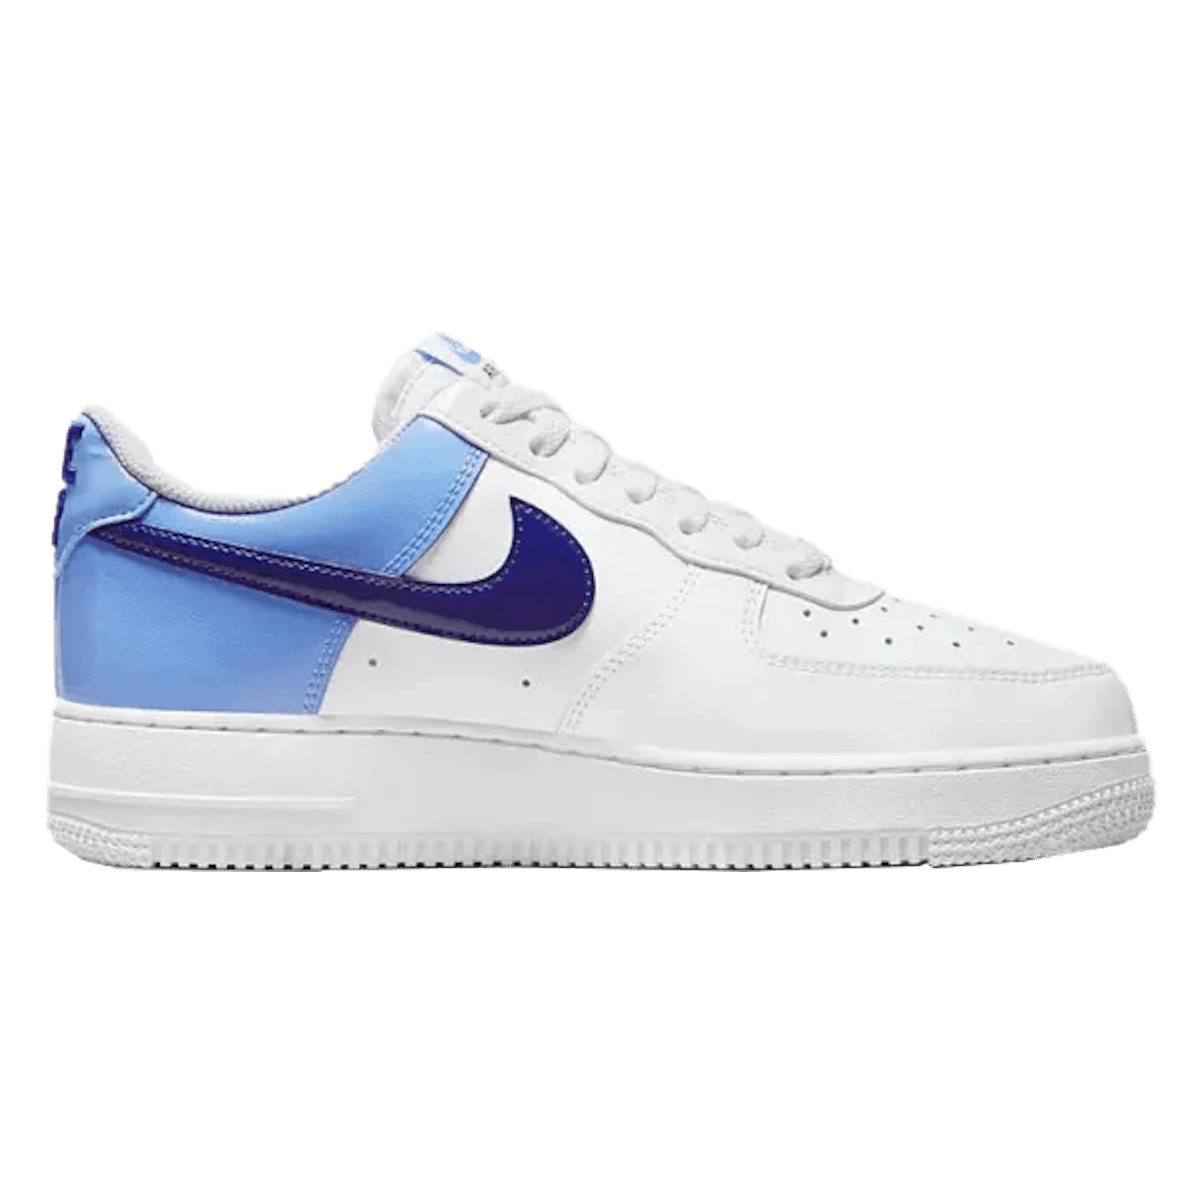 Nike Air Force 1 Low Patent Swoosh "White/University Blue"